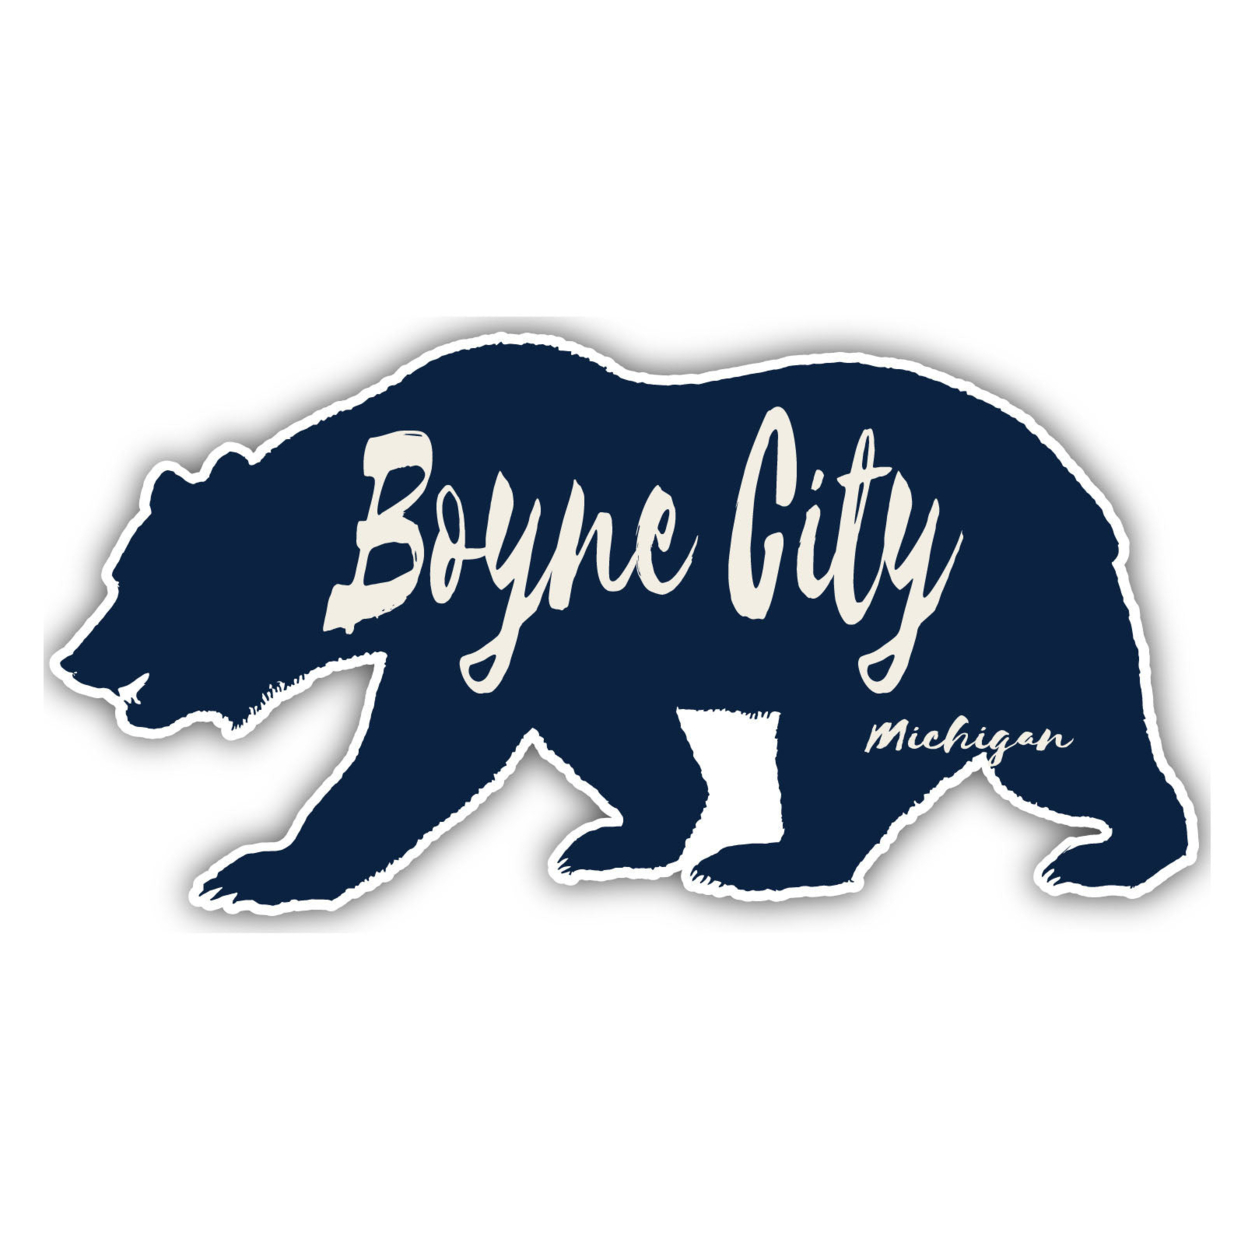 Boyne City Michigan Souvenir Decorative Stickers (Choose Theme And Size) - Single Unit, 4-Inch, Bear